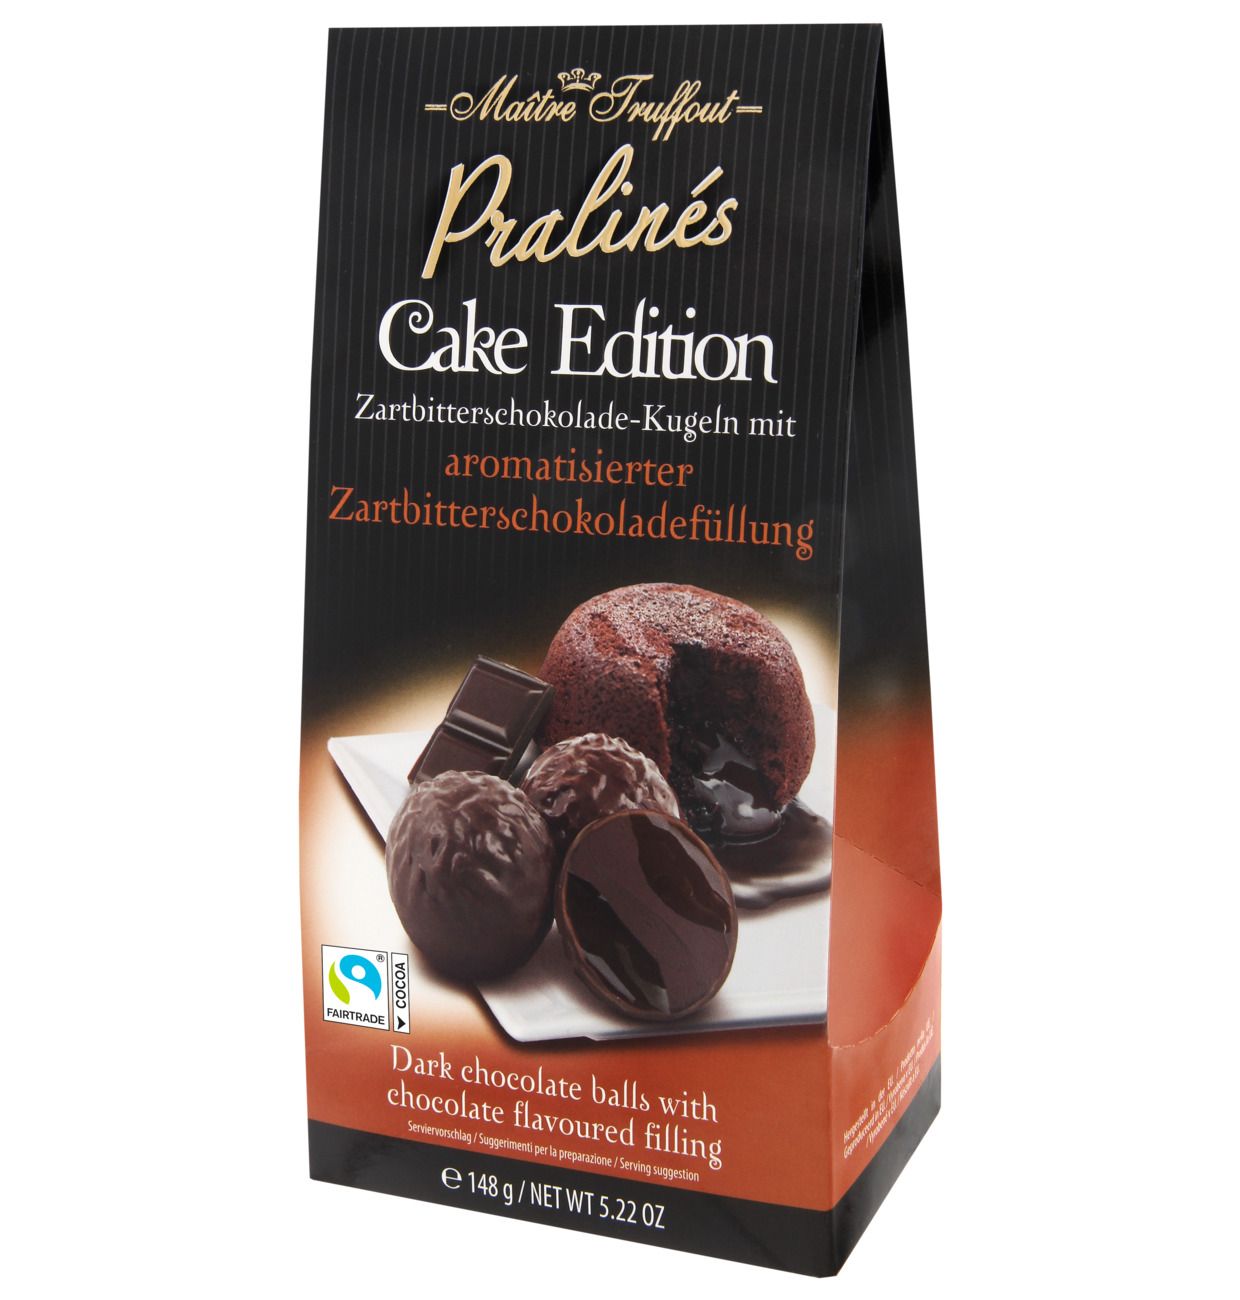 Pralines cake edition - dark chocolate 148g